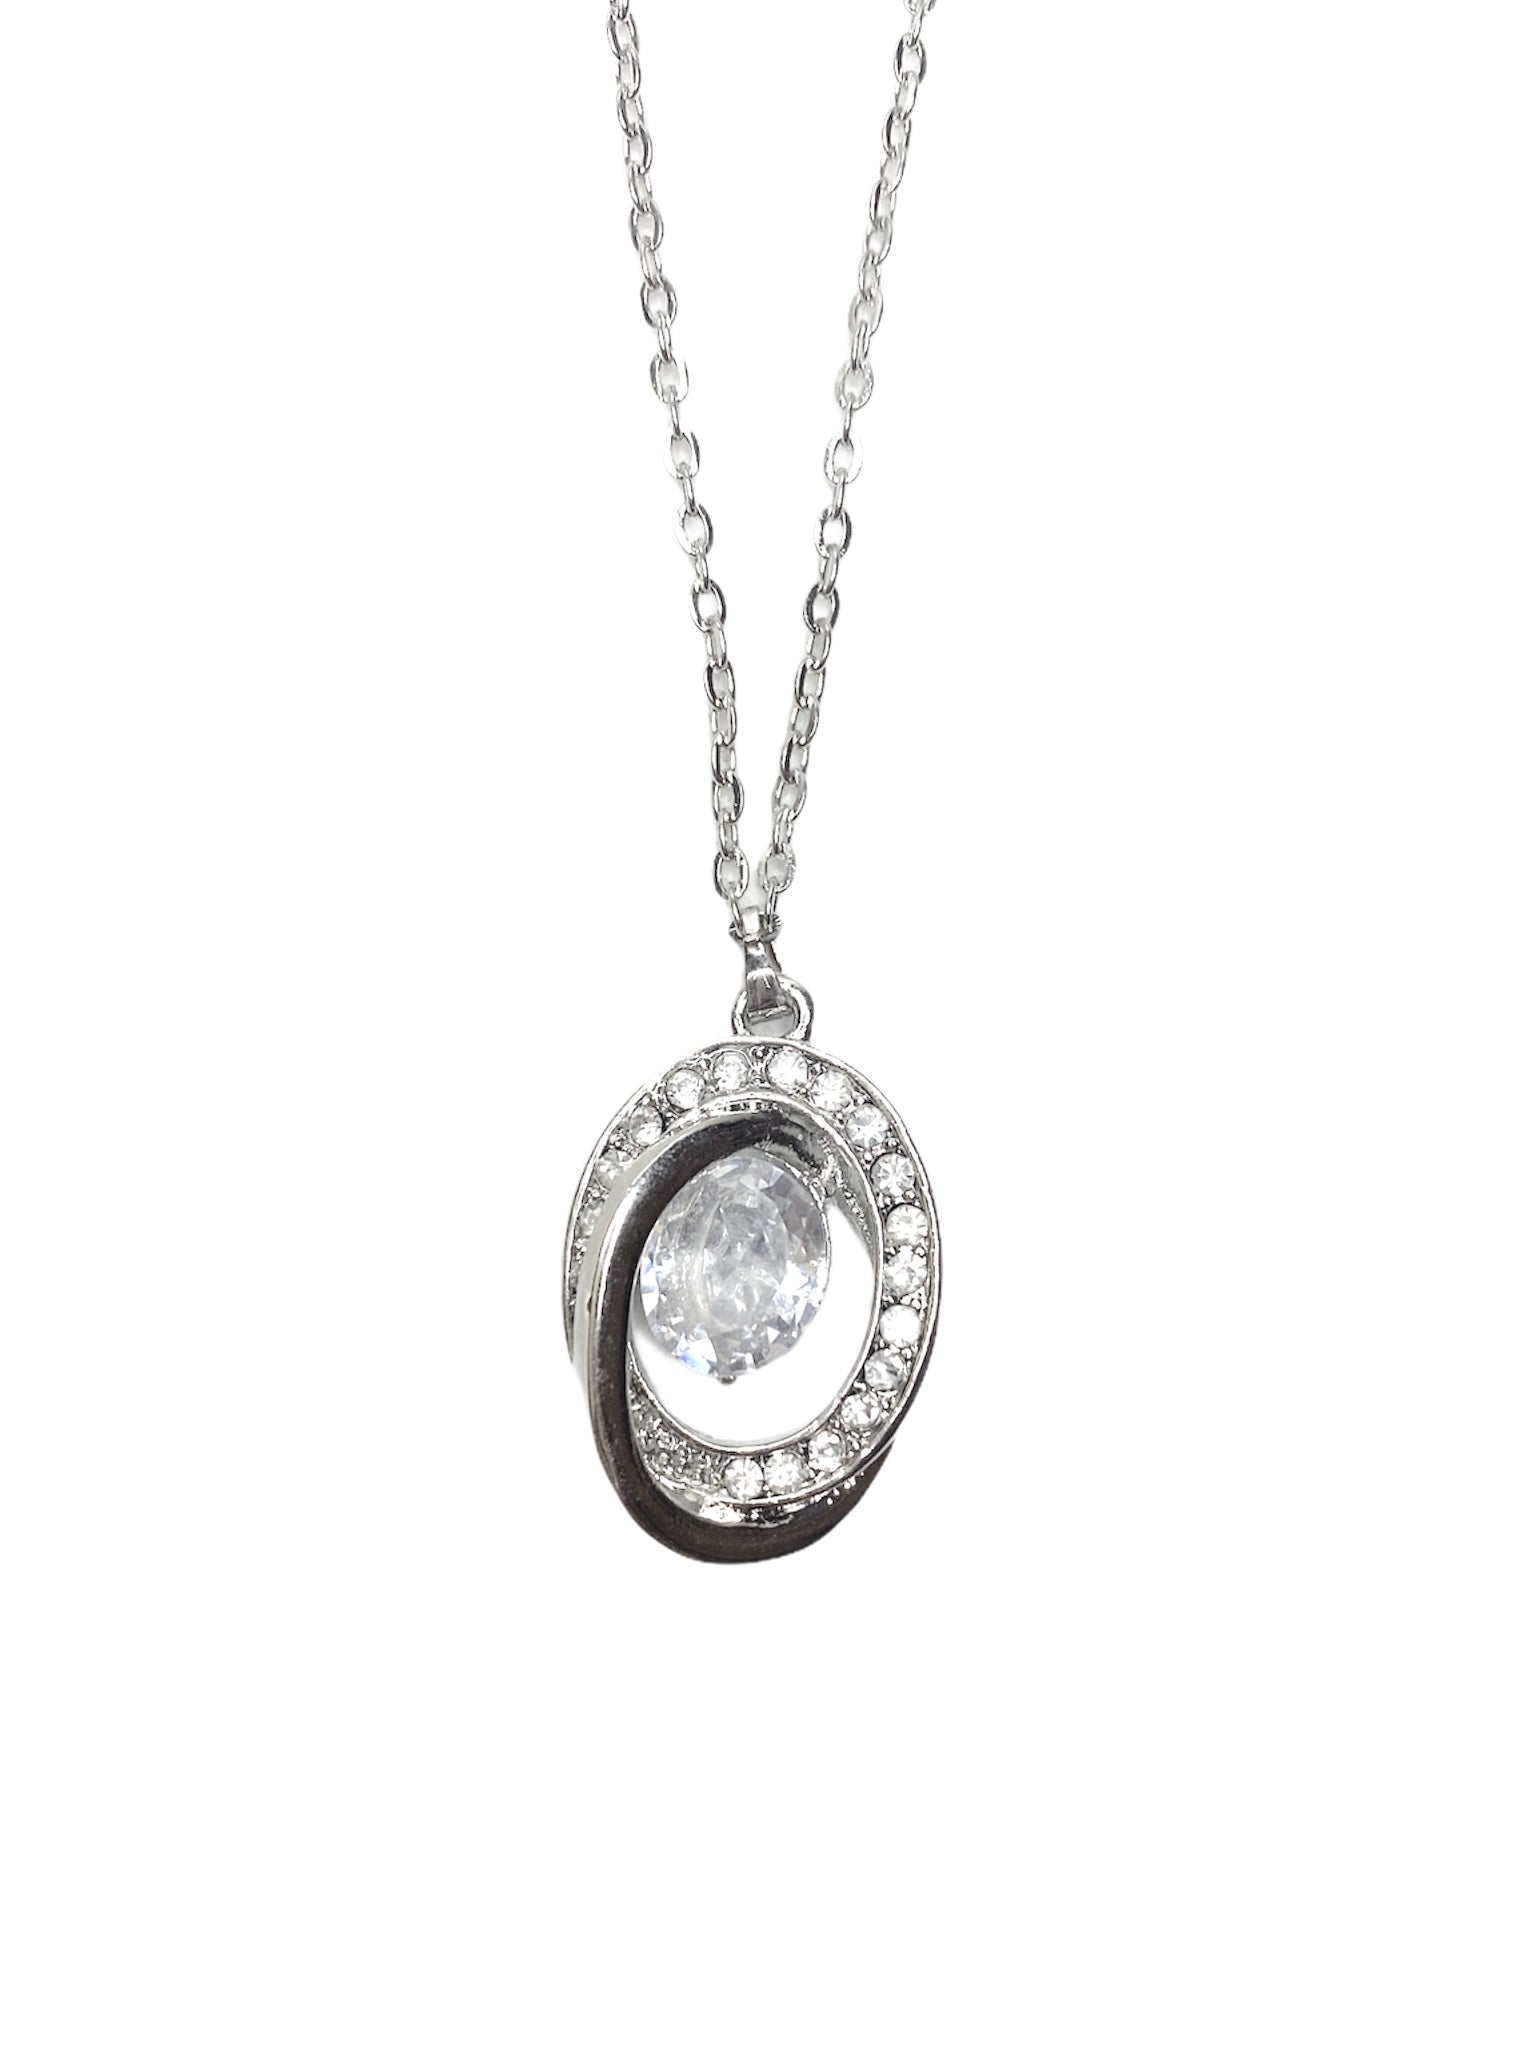 Oval pendant necklace (x4)